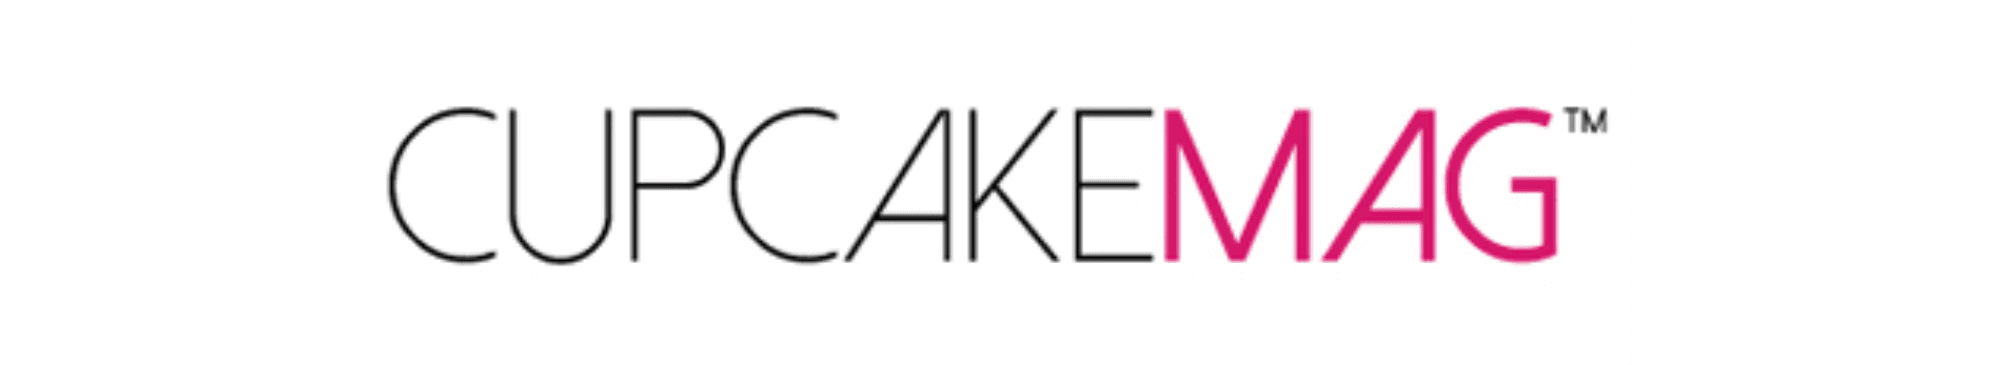 cupcakemag-logo-2